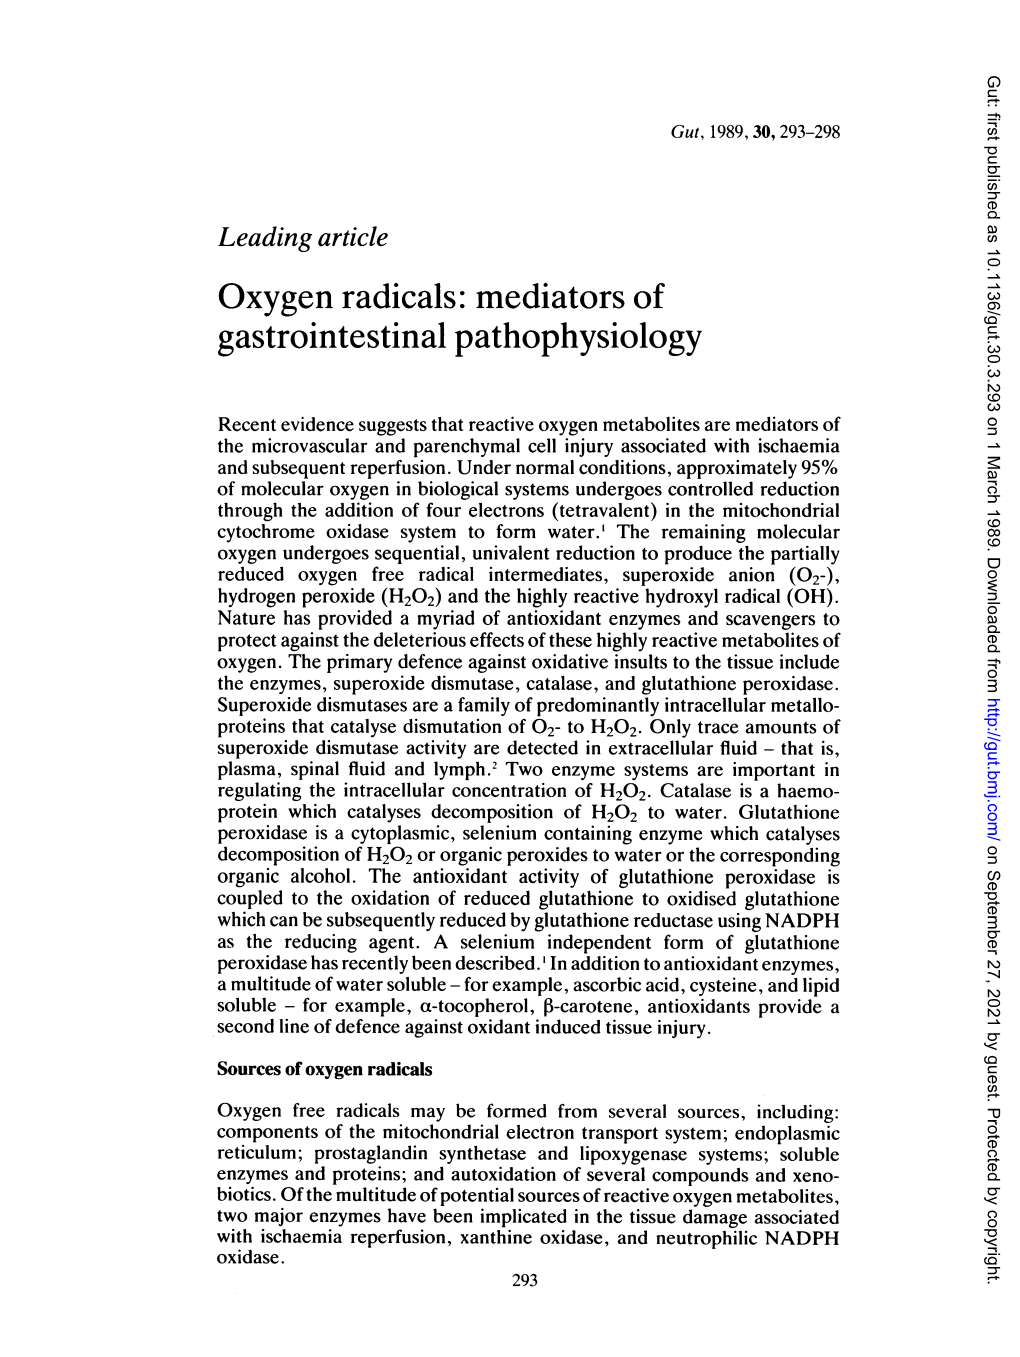 Oxygen Radicals: Mediators of Gastrointestinal Pathophysiology